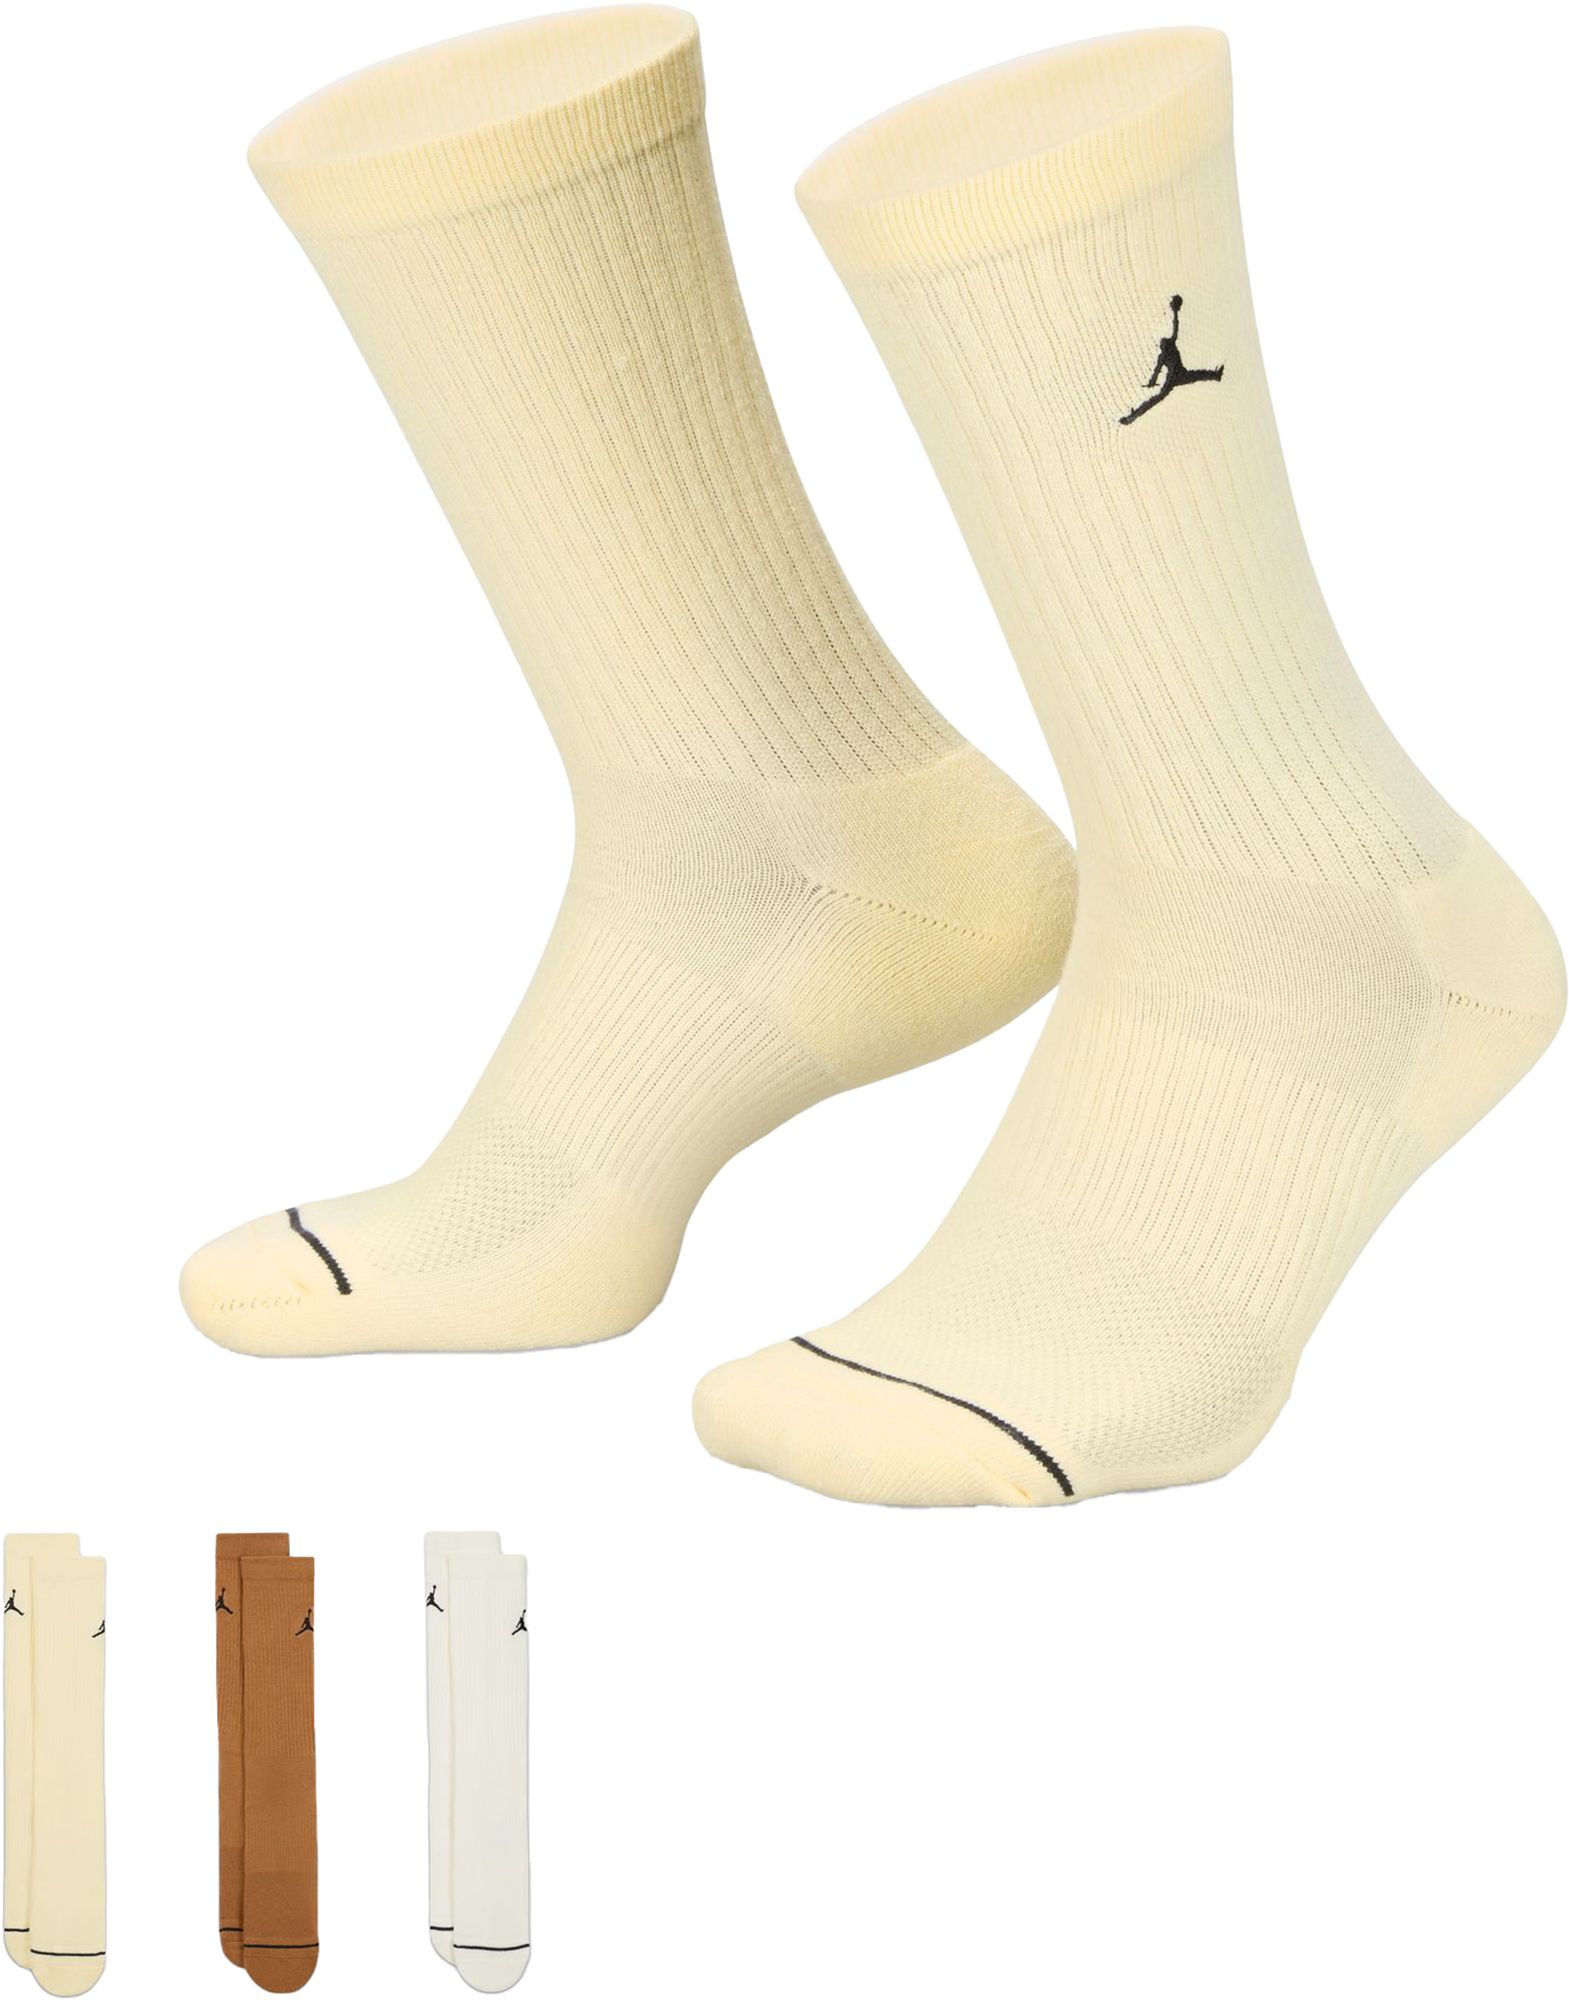 Jordan Everyday Crew Socks - 3 Pack